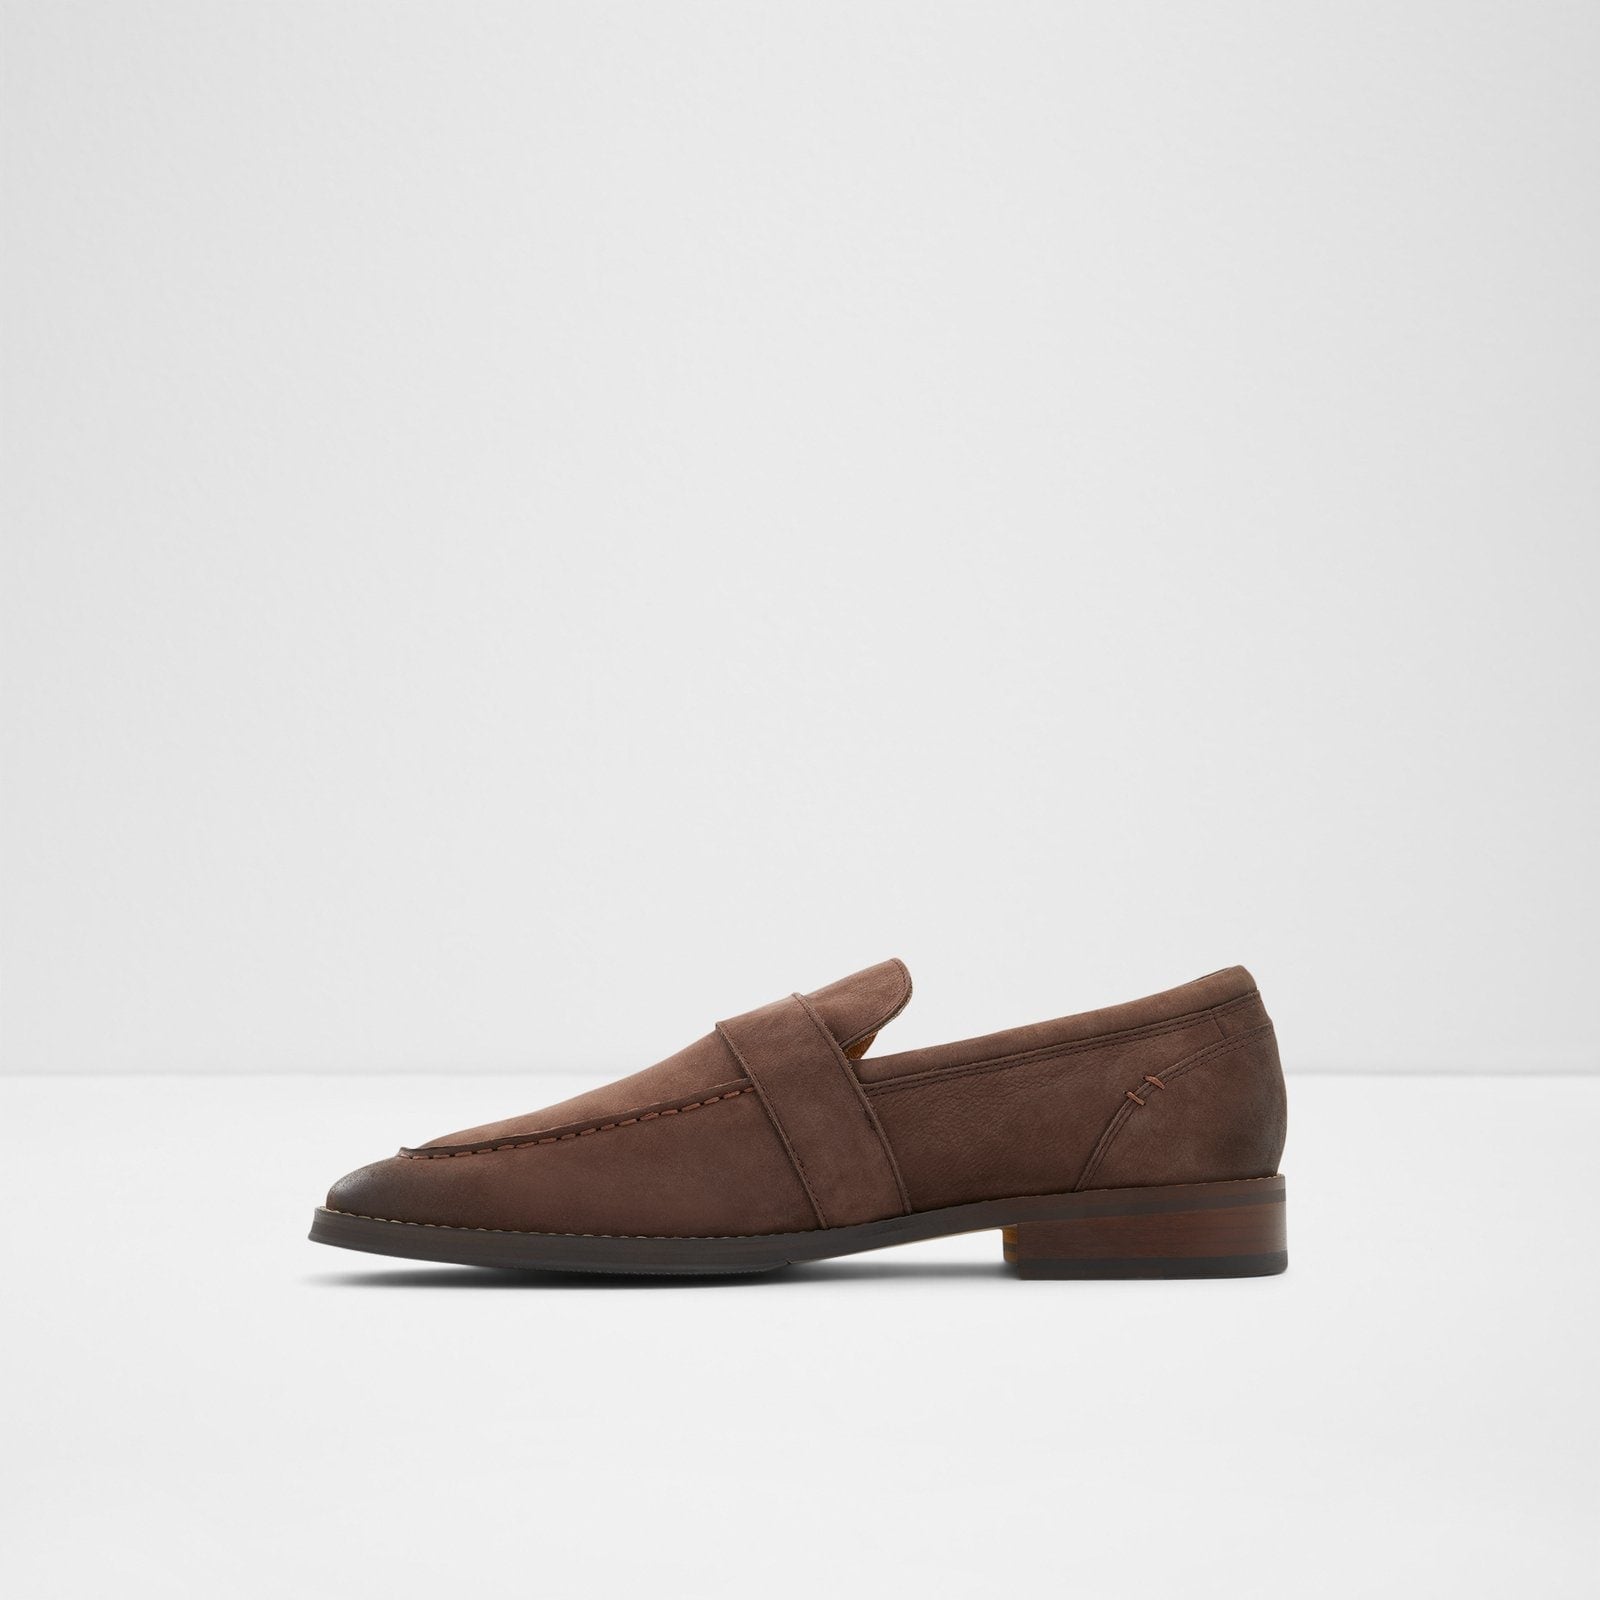 Nometnu Men Shoes - Dark Brown - ALDO KSA